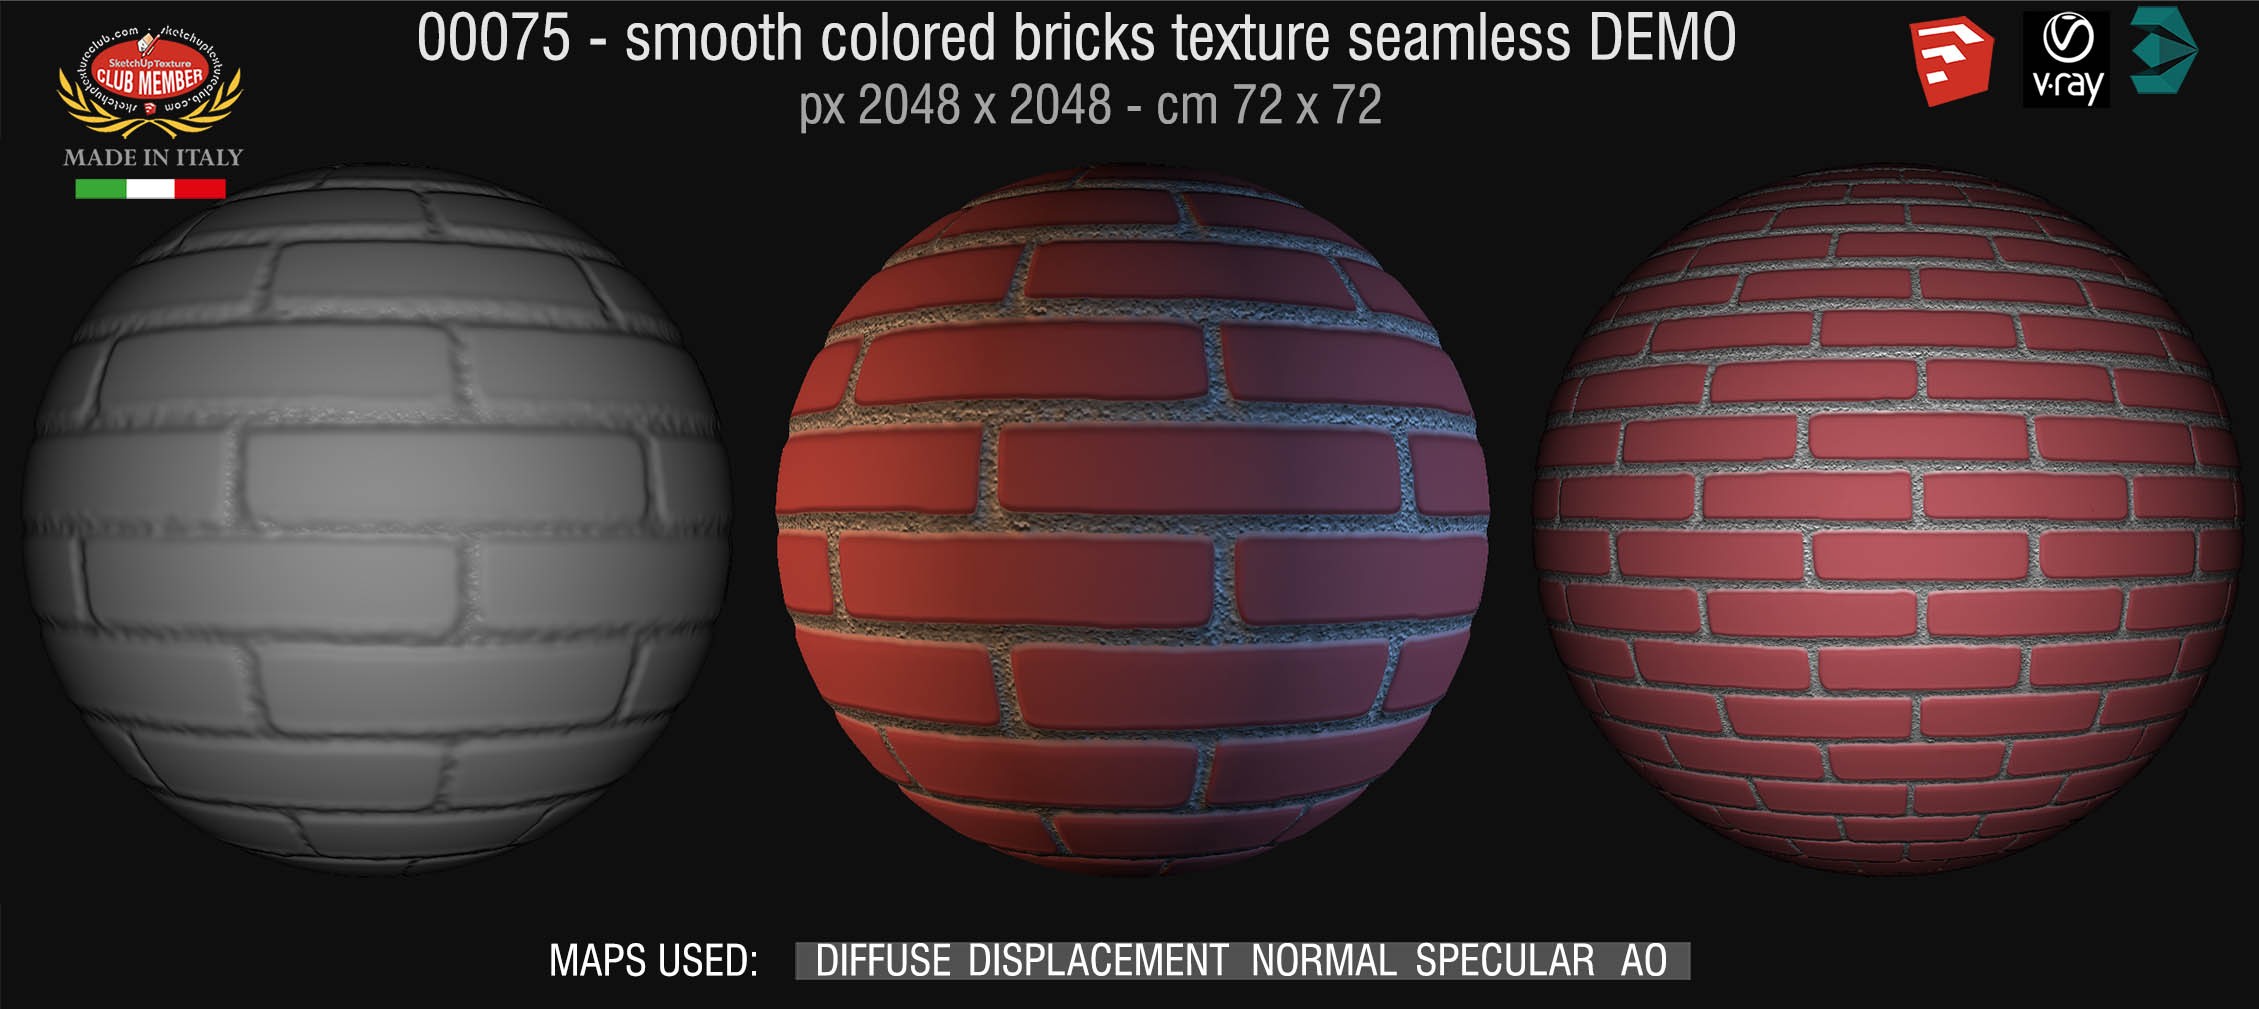 00075 smooth colored bricks texture seamless + maps DEMO